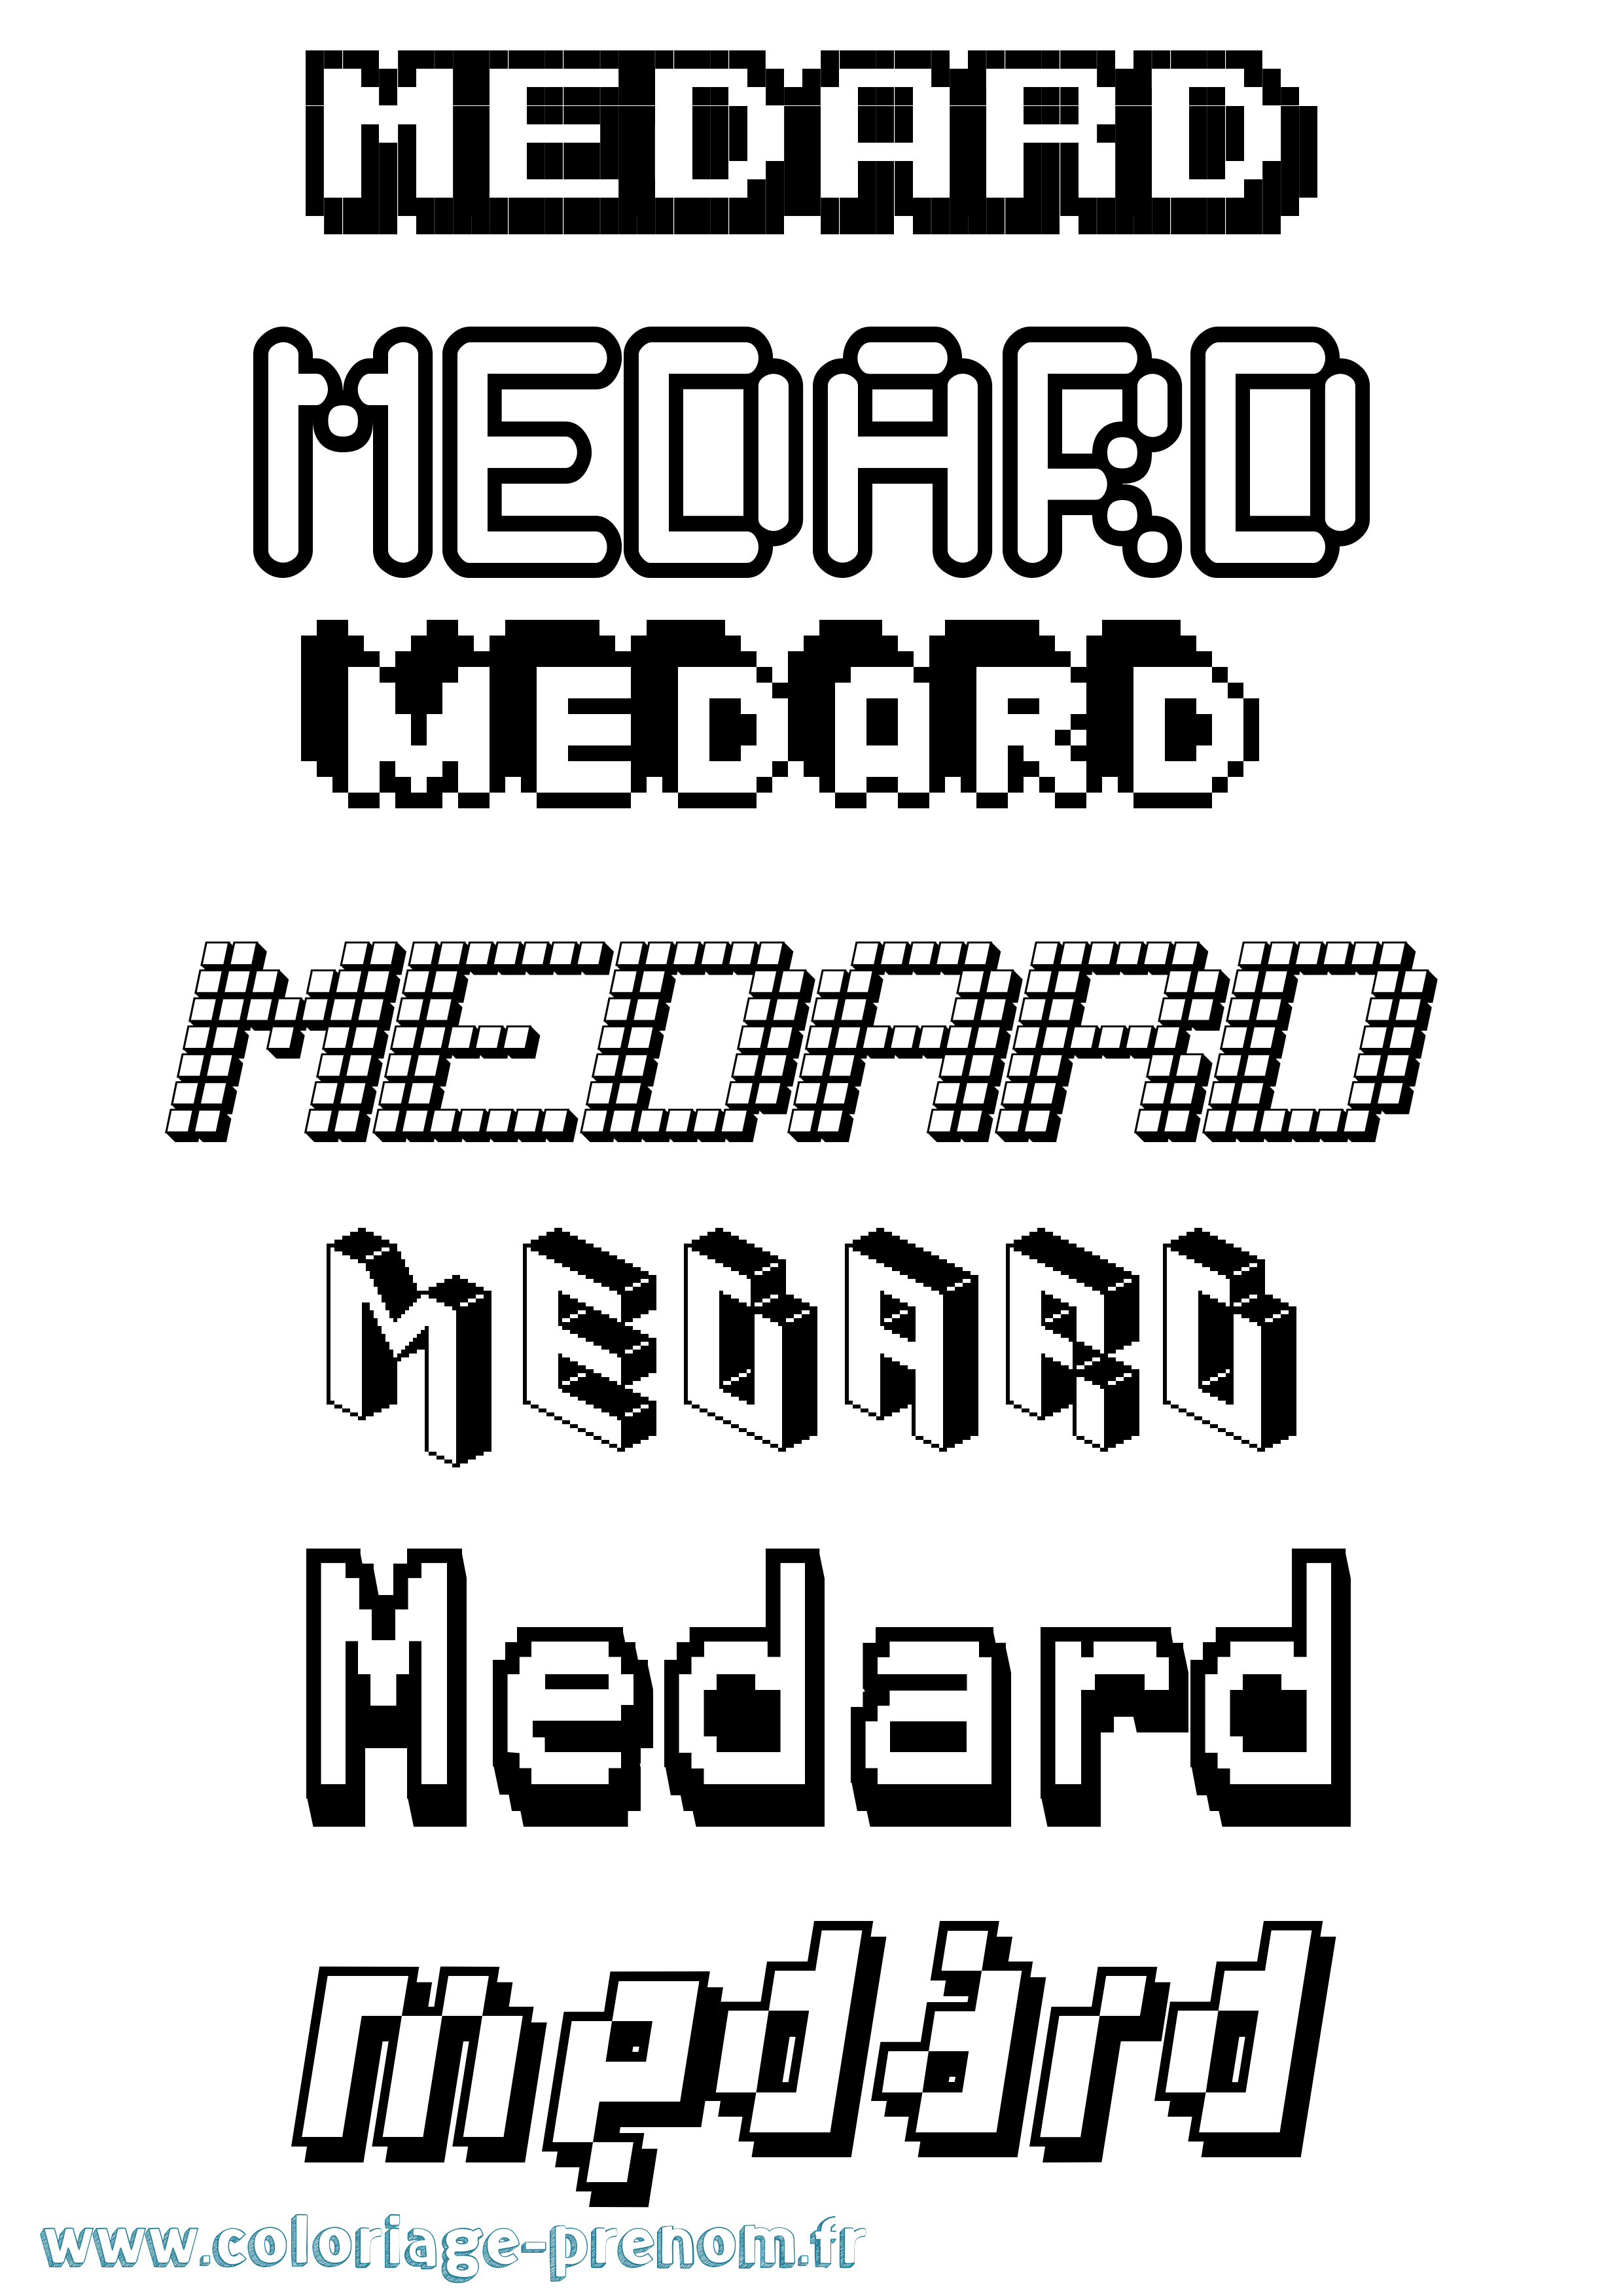 Coloriage prénom Medard Pixel